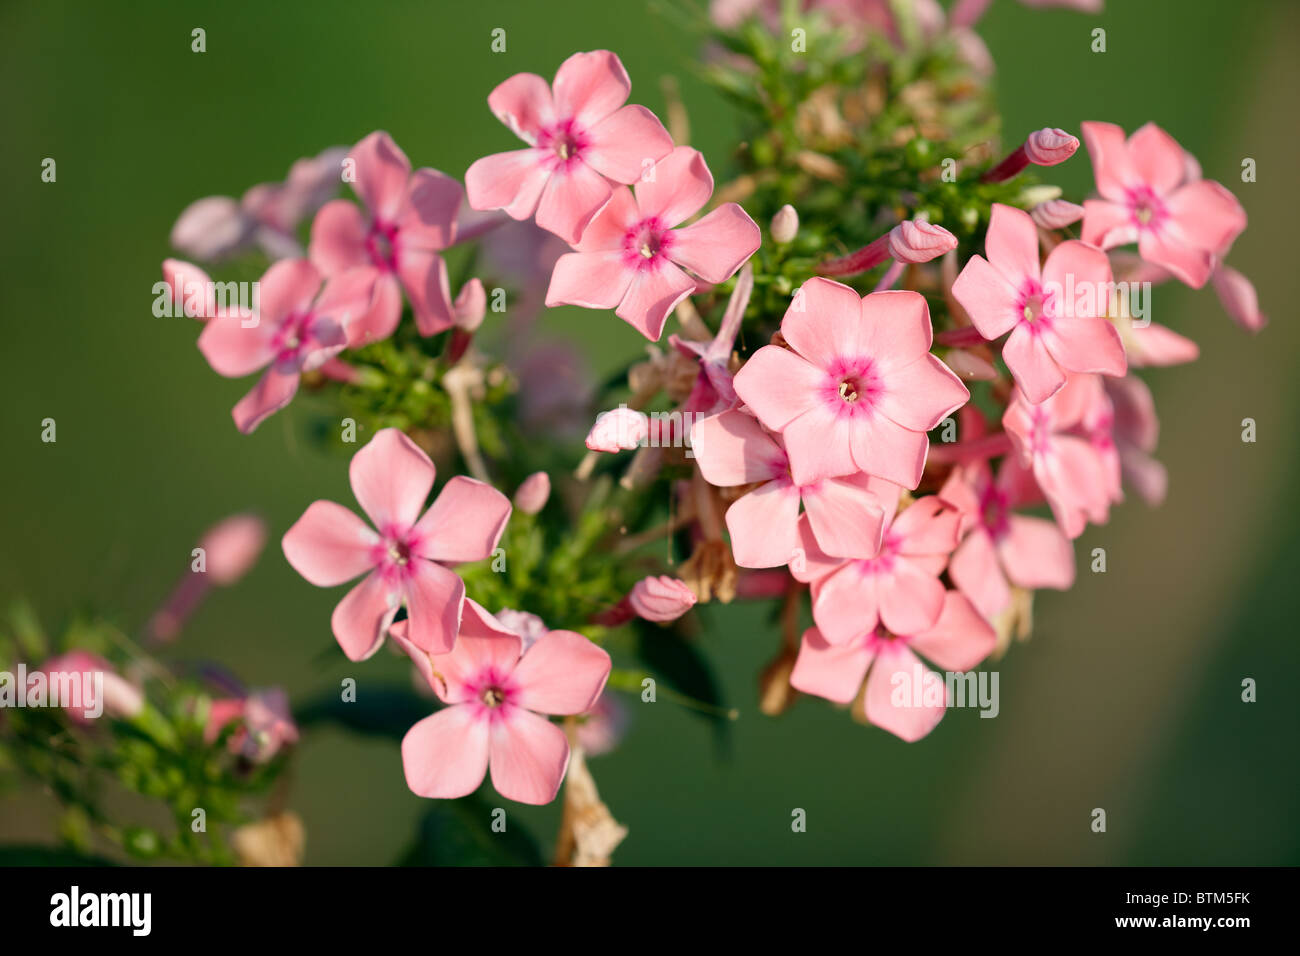 Pink phlox flowers. Scientific name: Phlox paniculata. Stock Photo